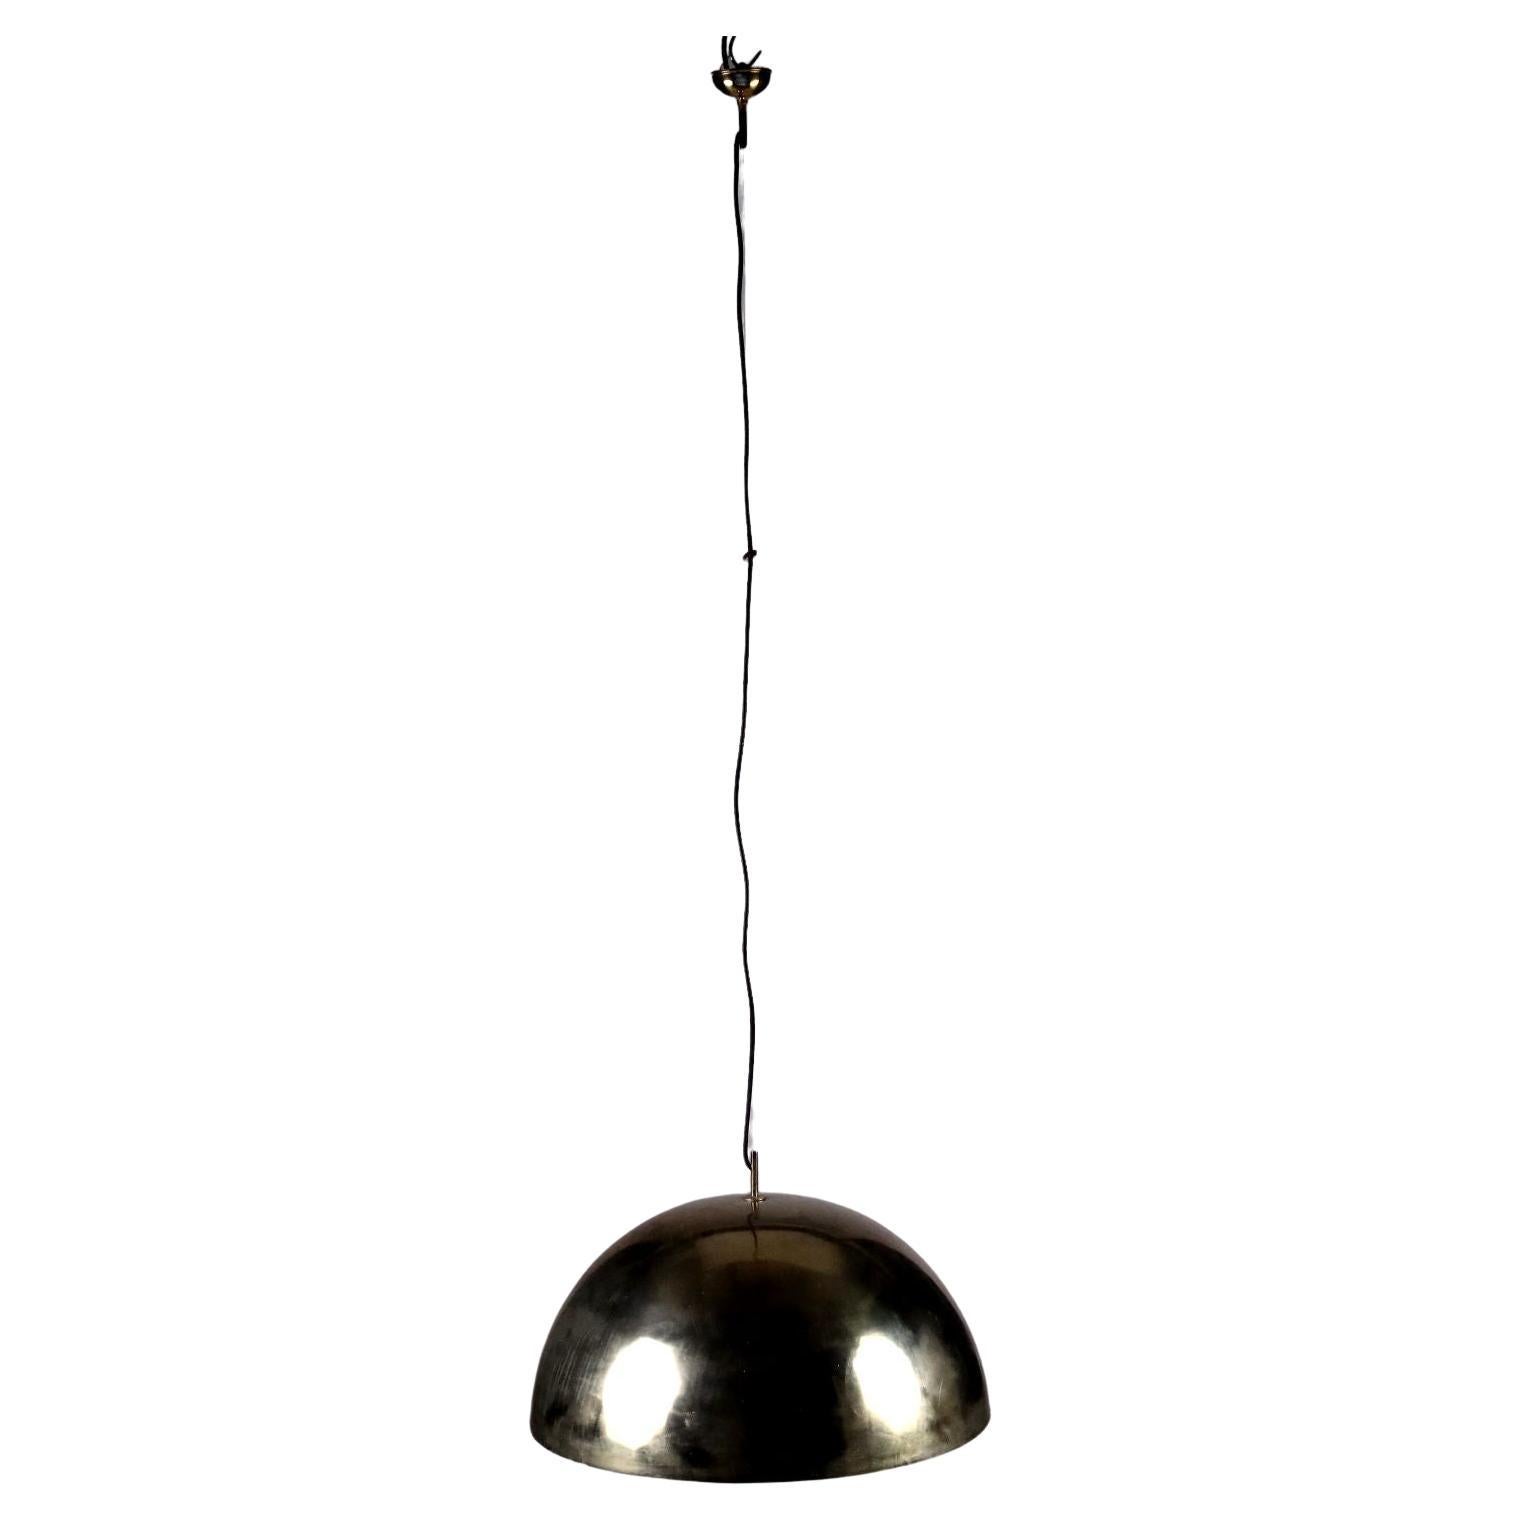 70s-80s ceiling lamp